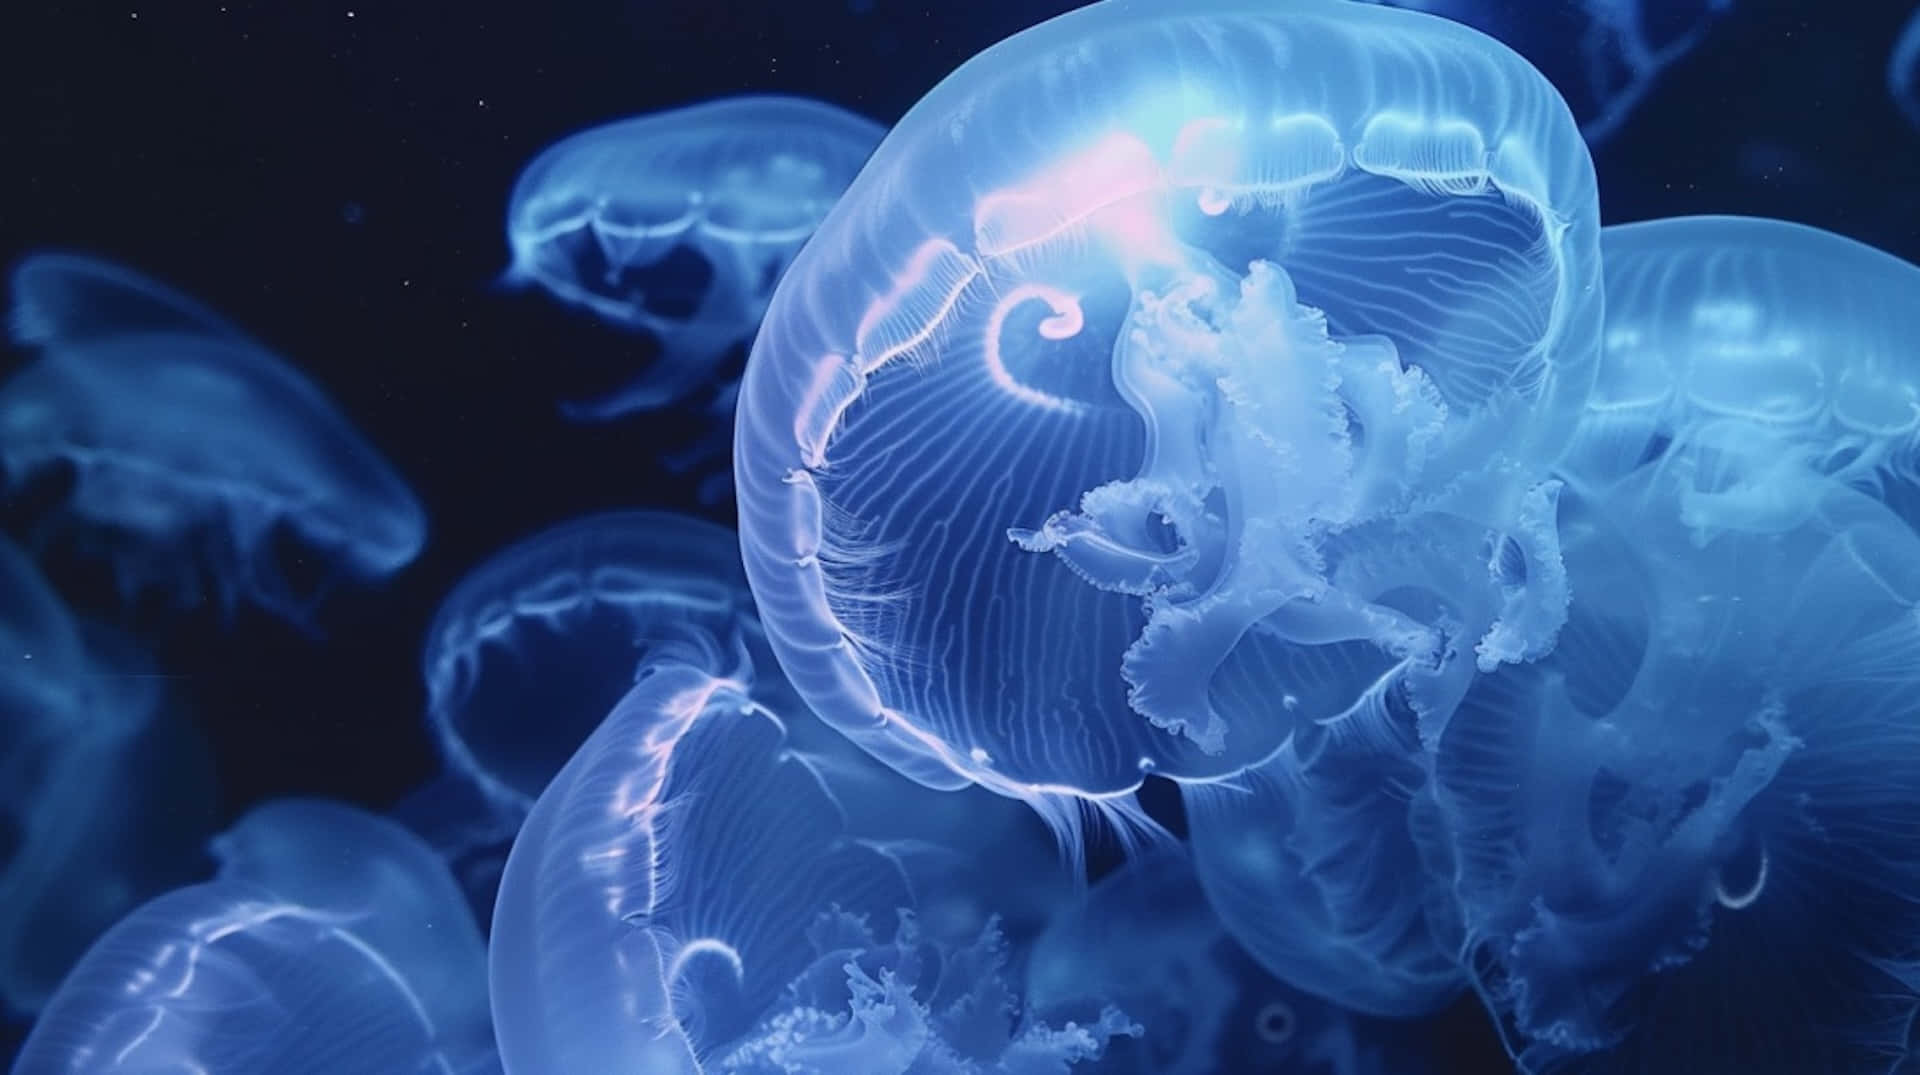 Moon Jellyfish Underwater Dance Wallpaper